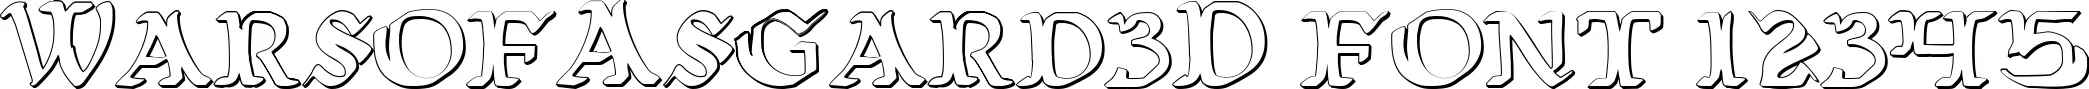 Dynamic WarsofAsgard3D Font Preview https://safirsoft.com